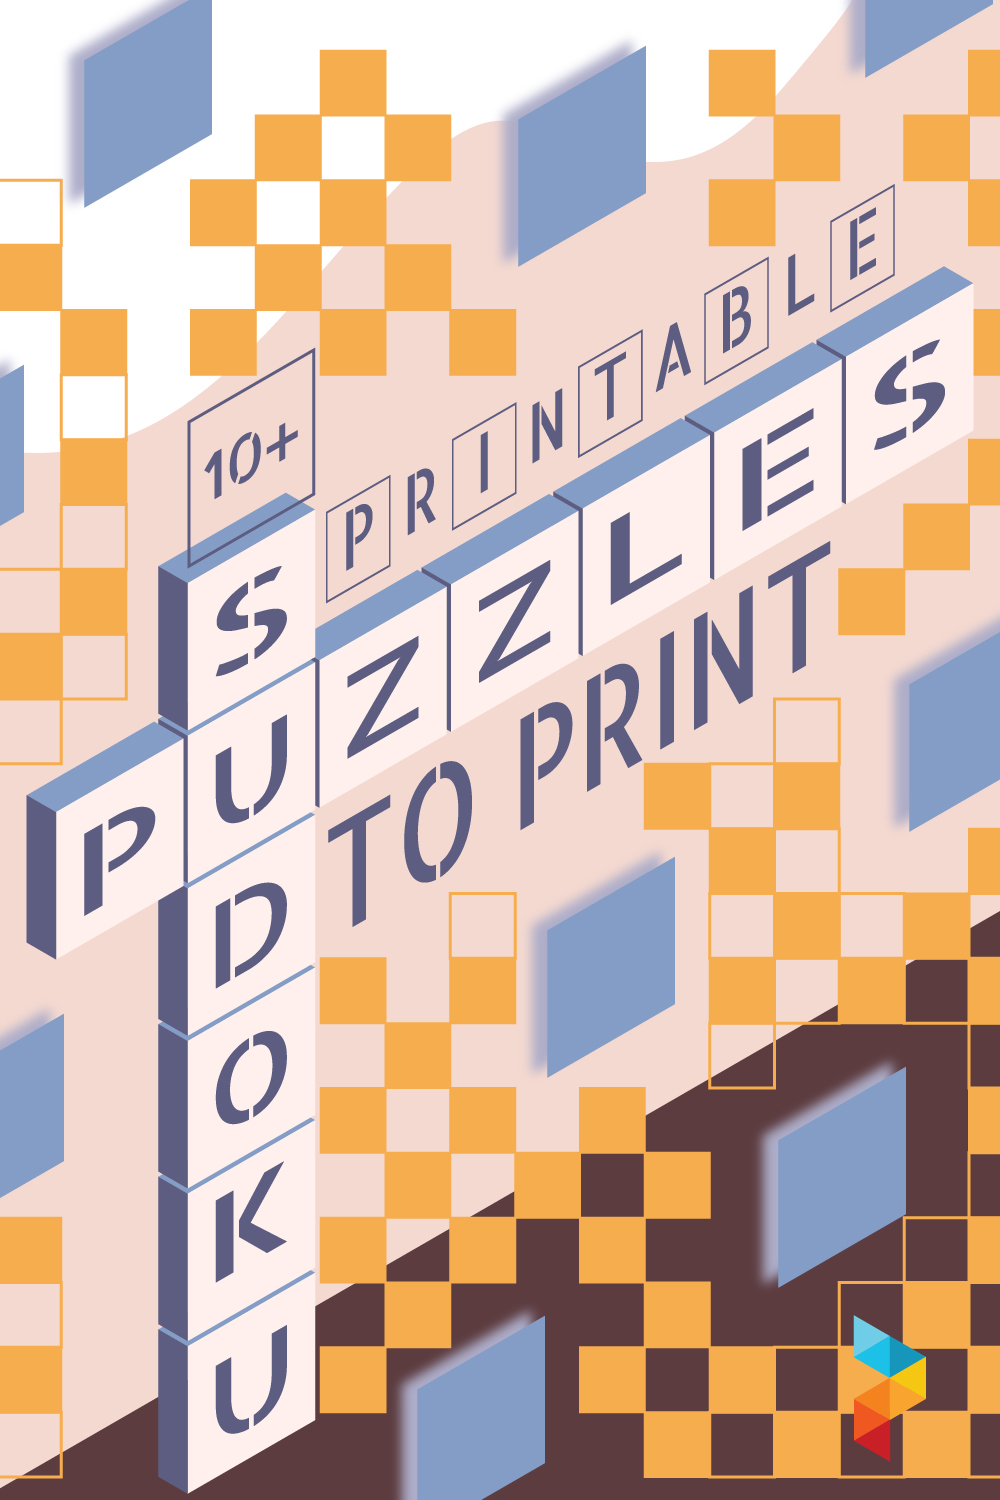 Printable Sudoku Puzzles To Print